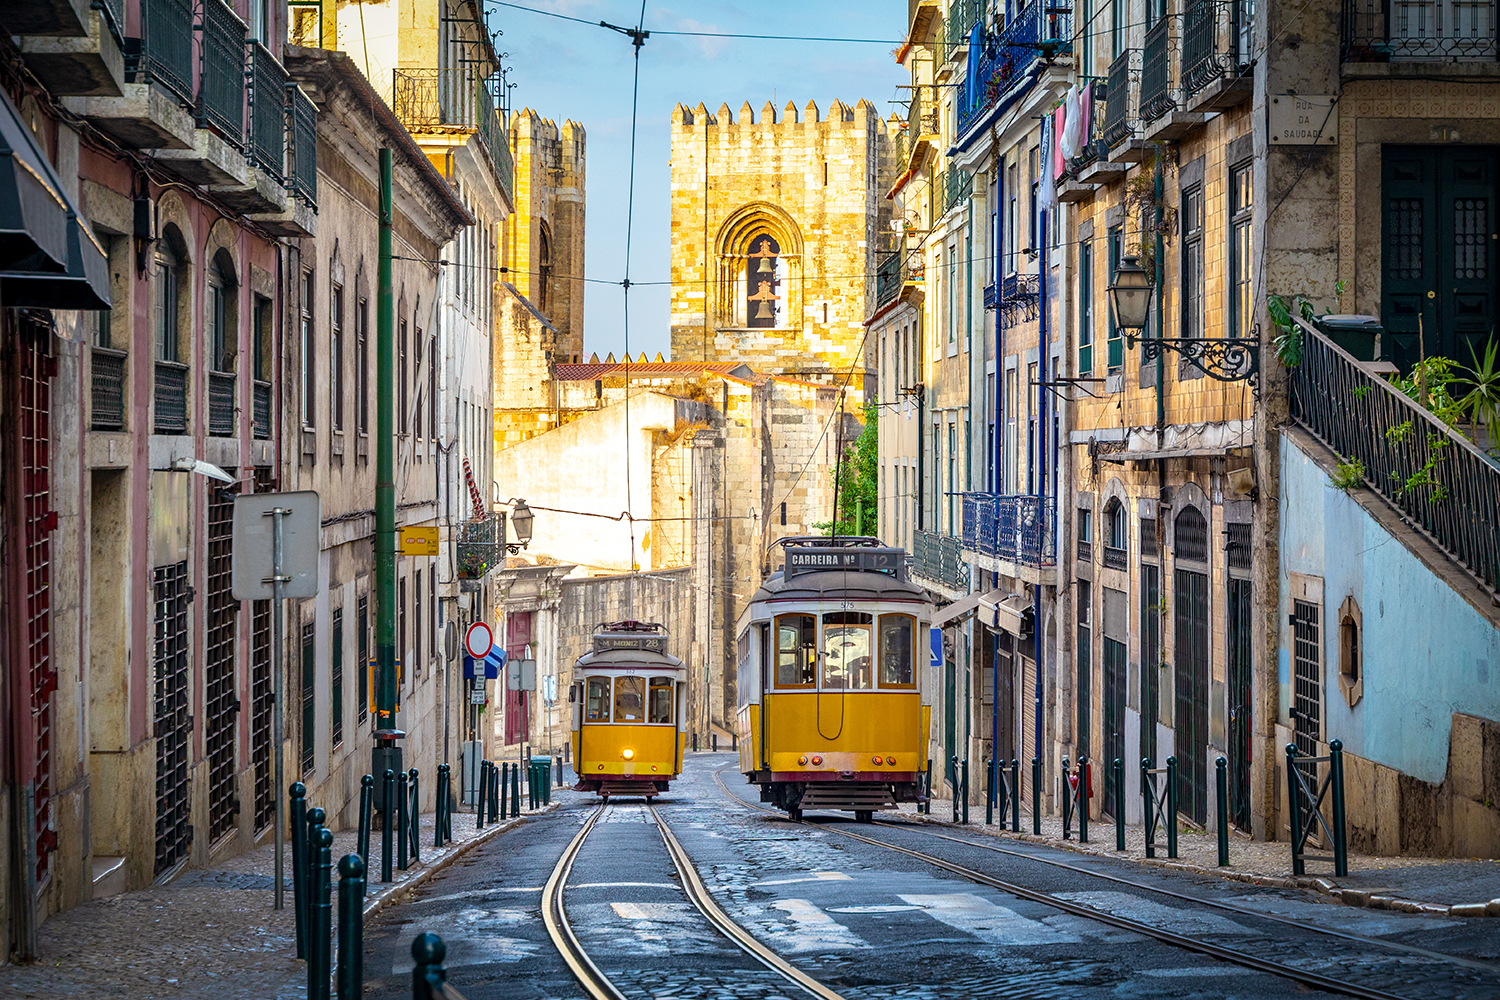 Historic Tram in Lisbon